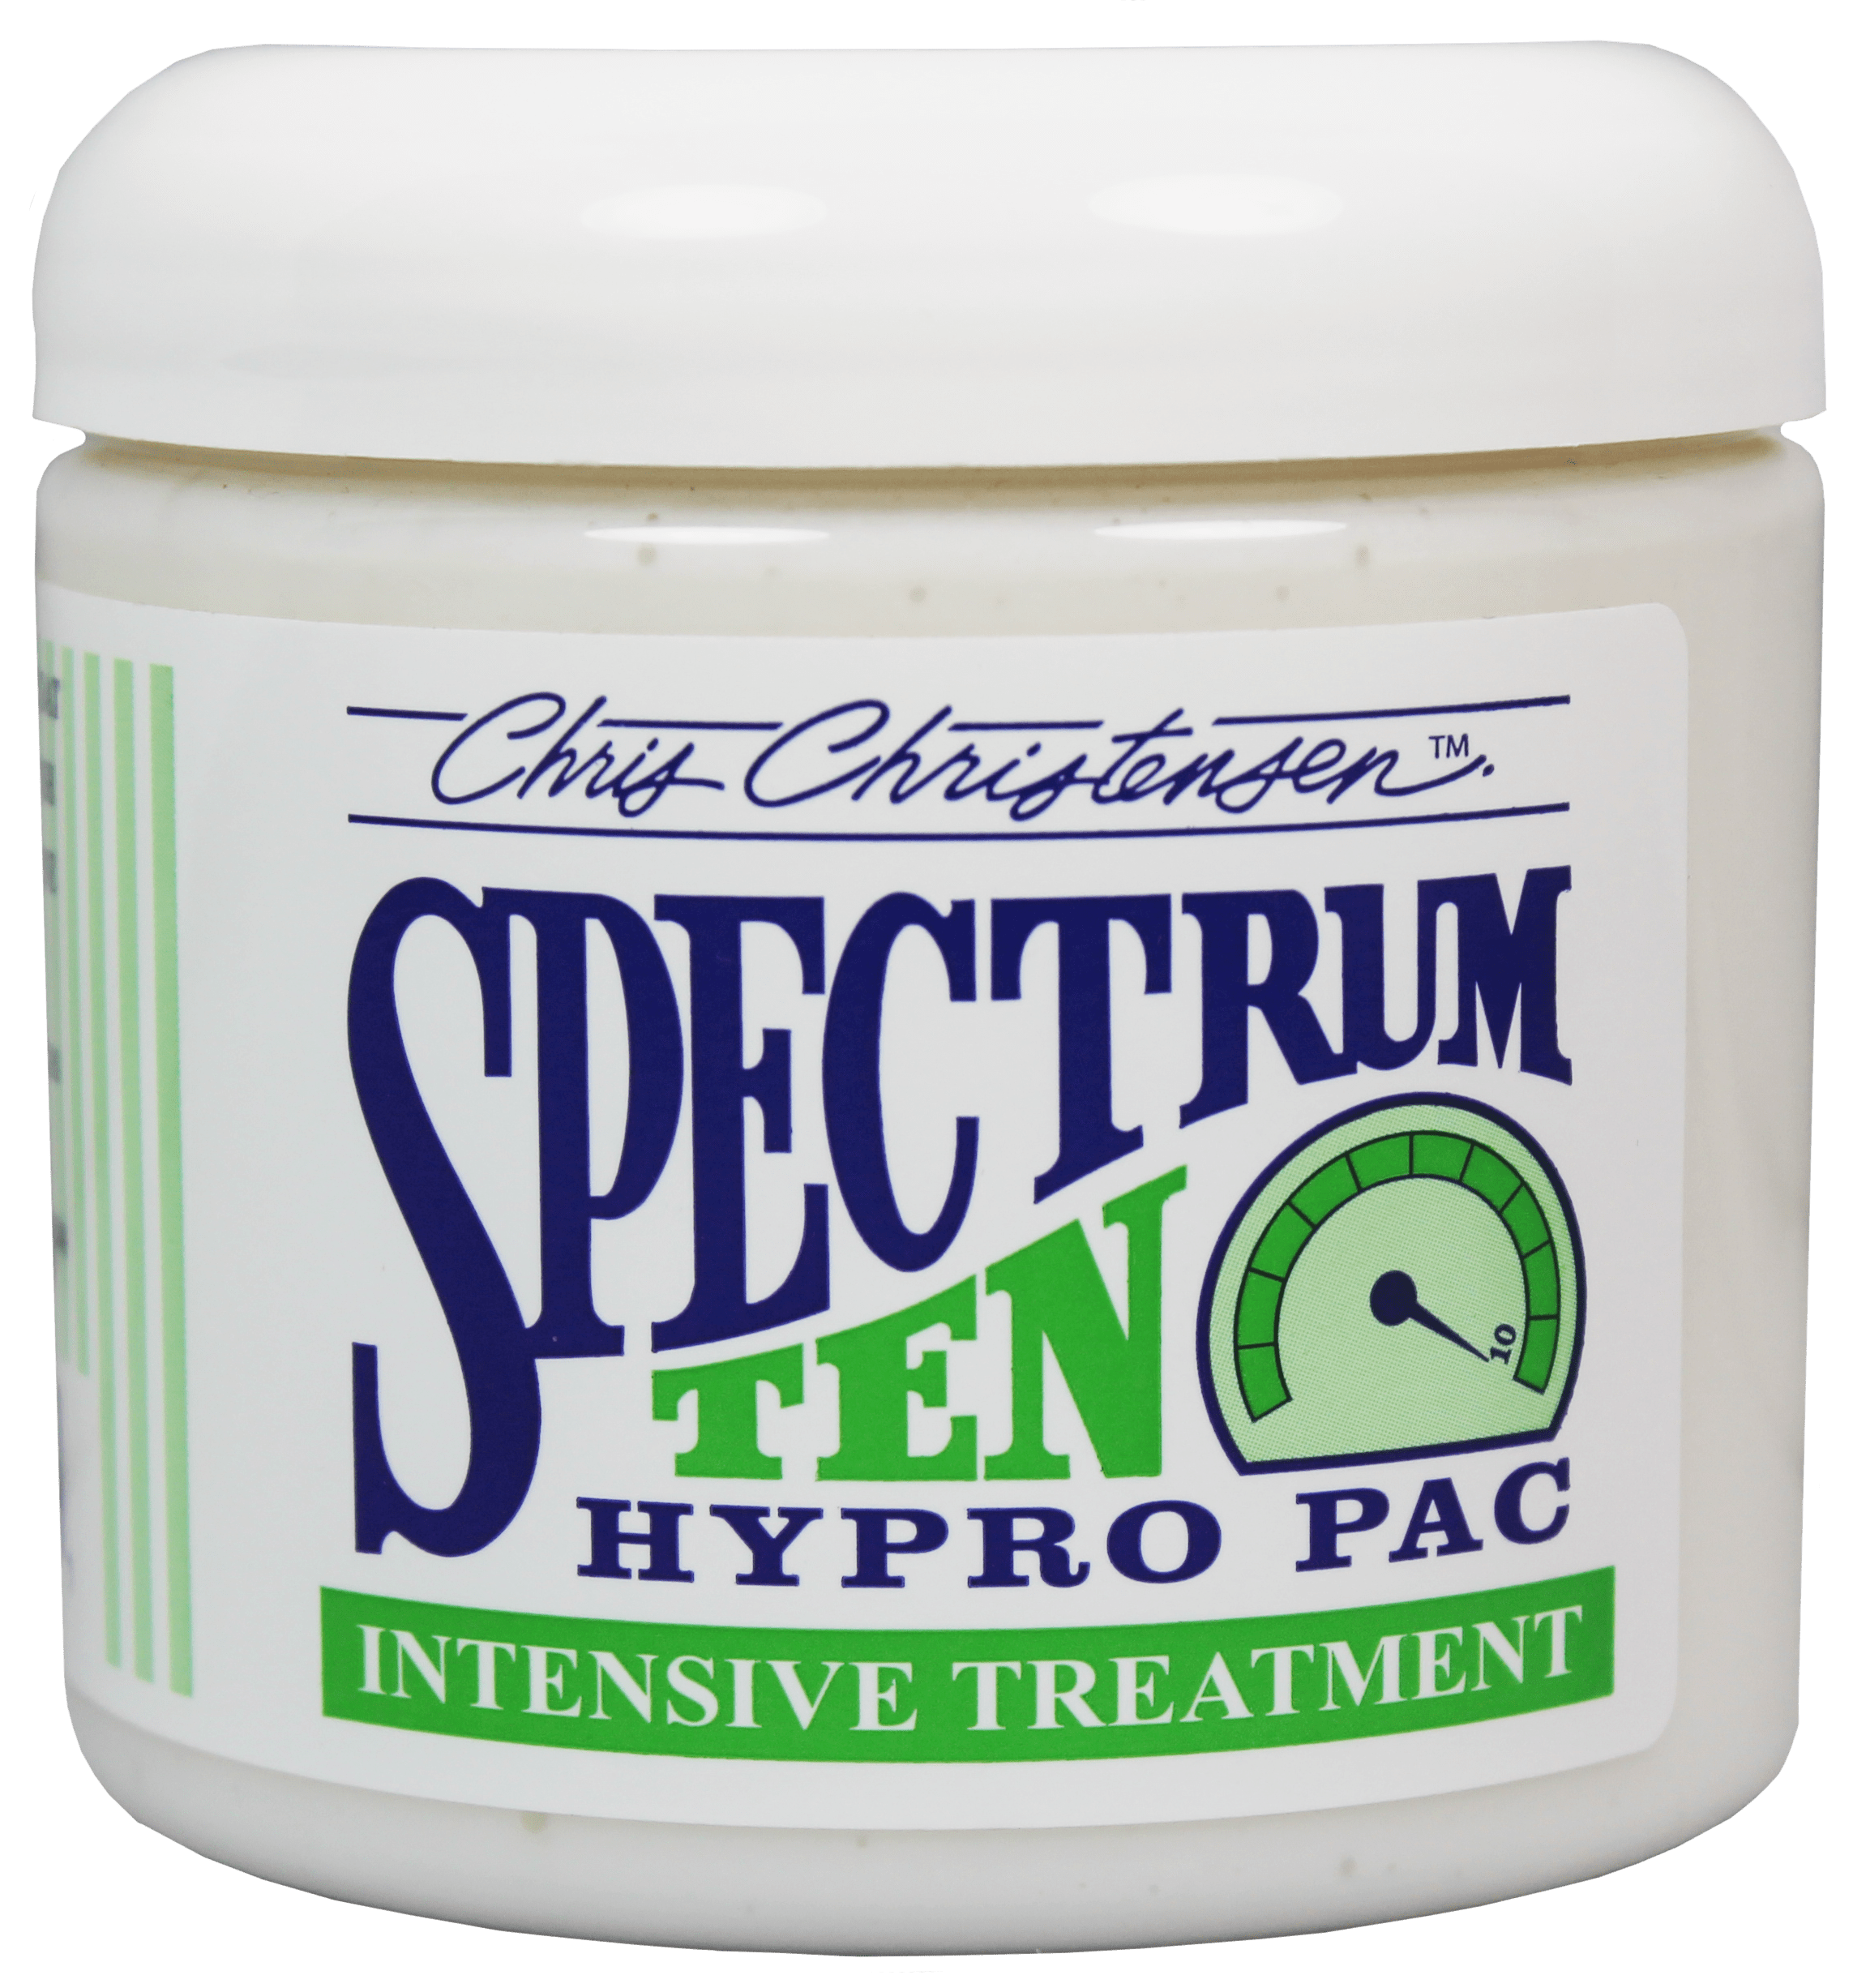 CC - Spectrum Ten Hypro Pac